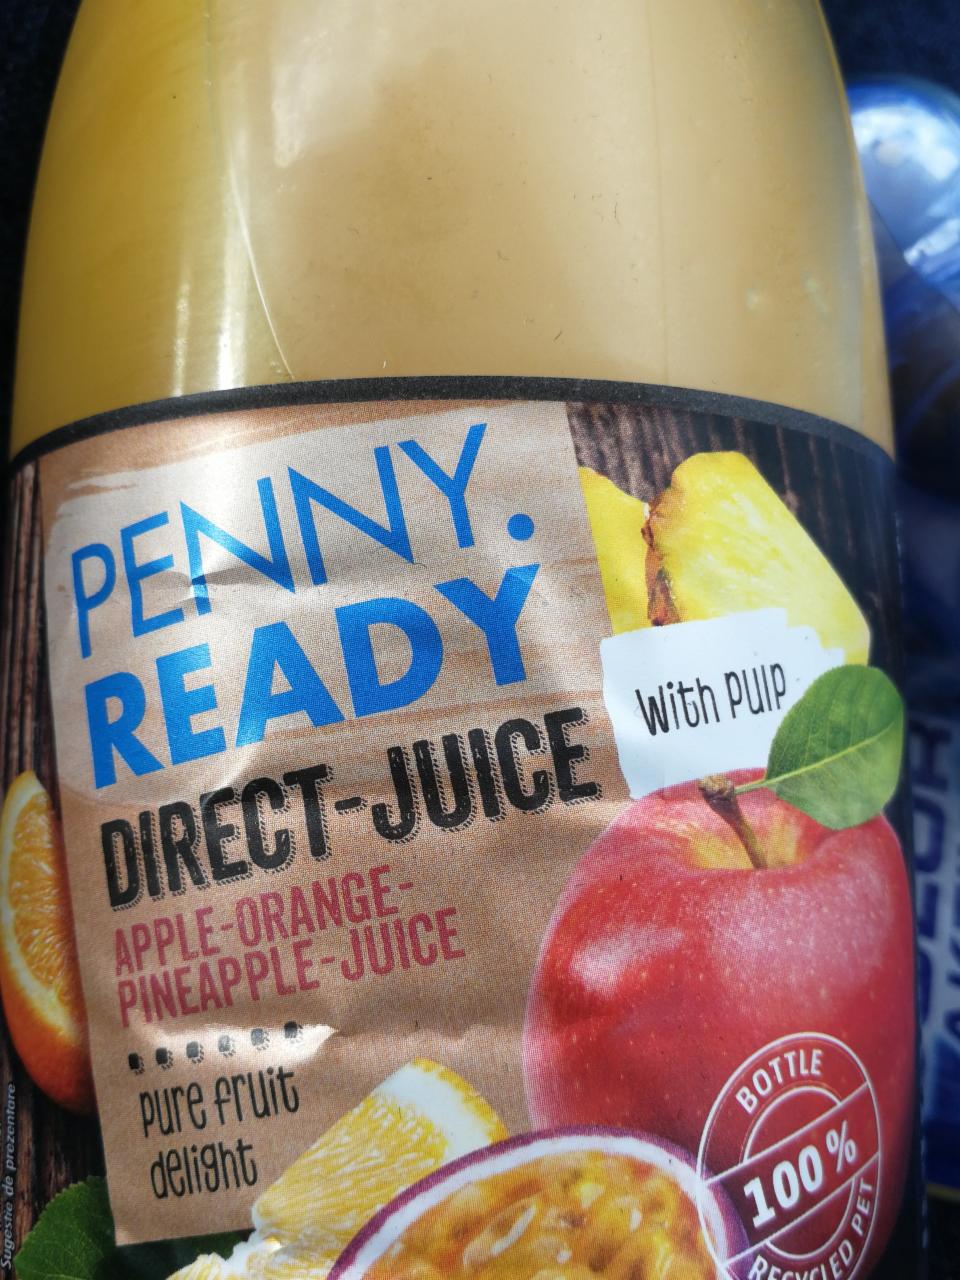 Fotografie - Direct juice apple-orange-pineapple-maracuja Penny ready